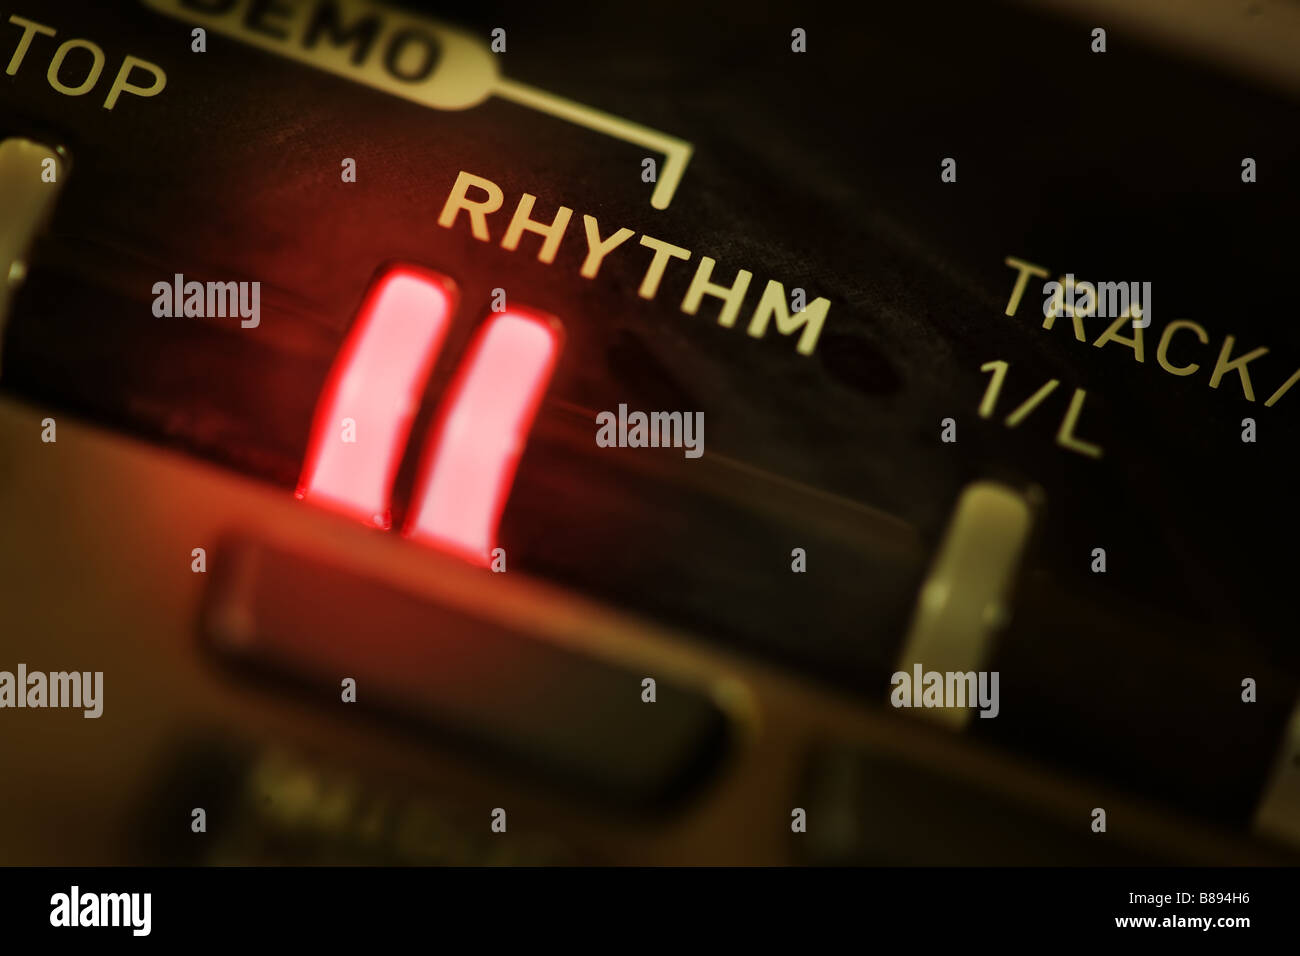 red rhythm lights light up on a electronic keyboard Stock Photo